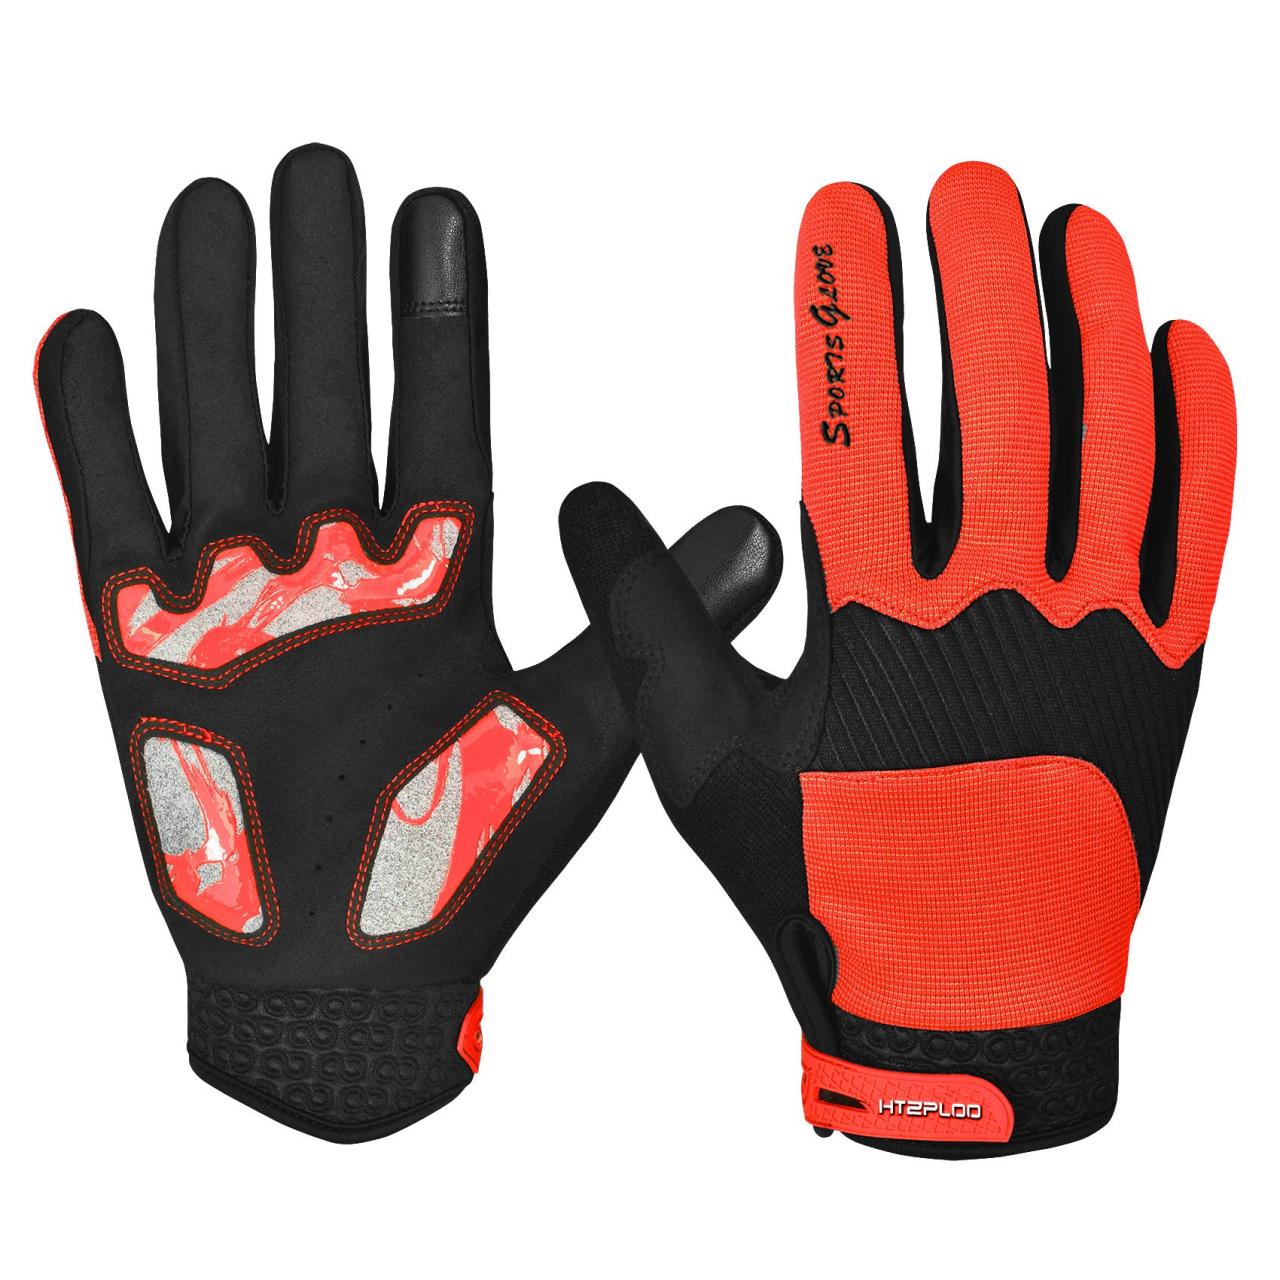 HTZPLOO Cycling Gloves with Shock-absorbing Pad Full Finger Bike Gloves  Bicycle Gloves Road Racing Gloves Men/Women Work Gloves H-004- Buy Online  in Aruba at aruba.desertcart.com. ProductId : 83957068.